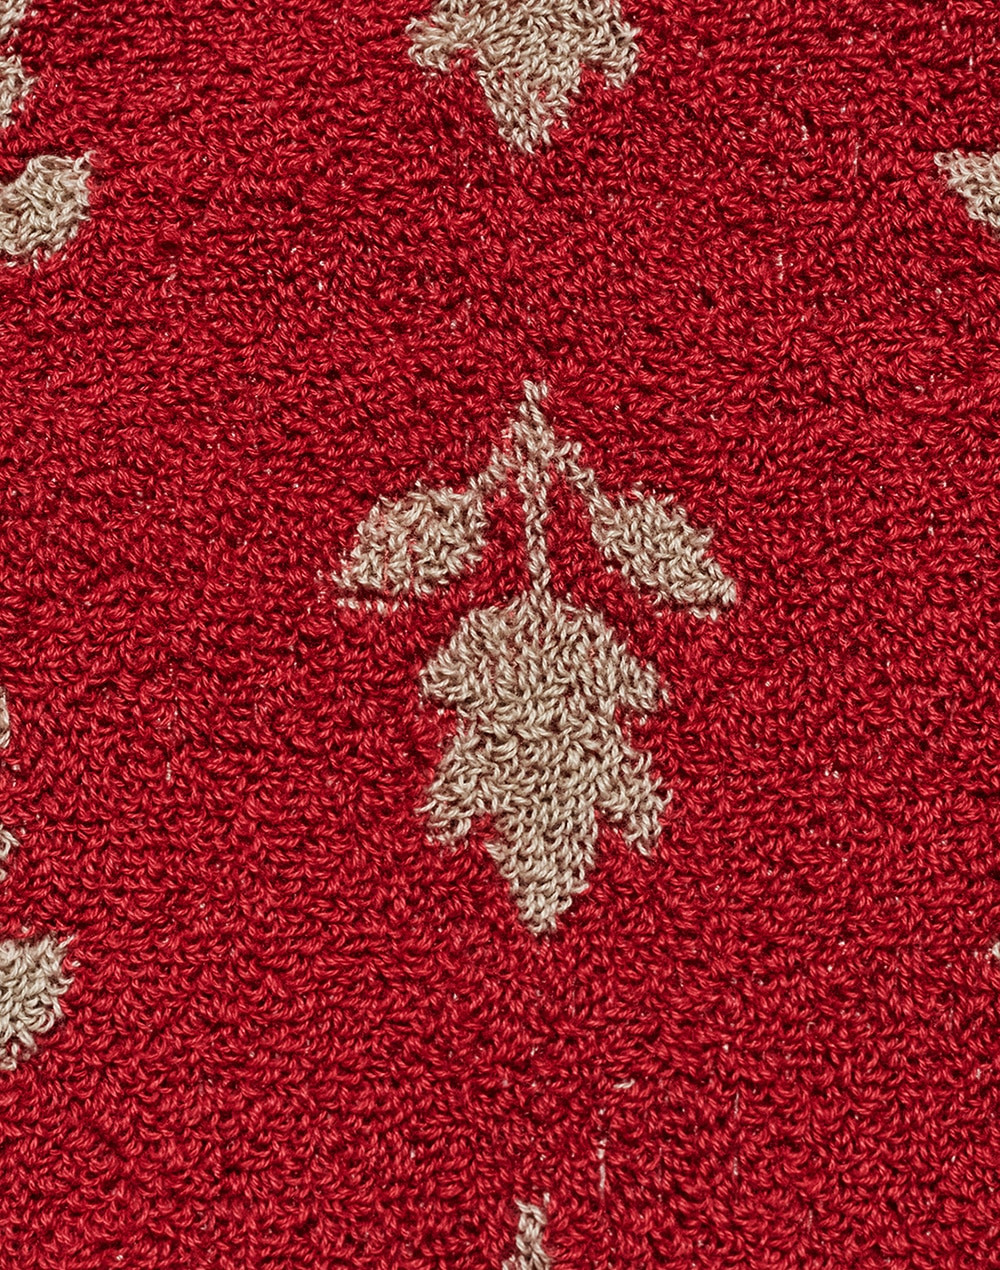 Red Smriti Cotton Pile Face Towel